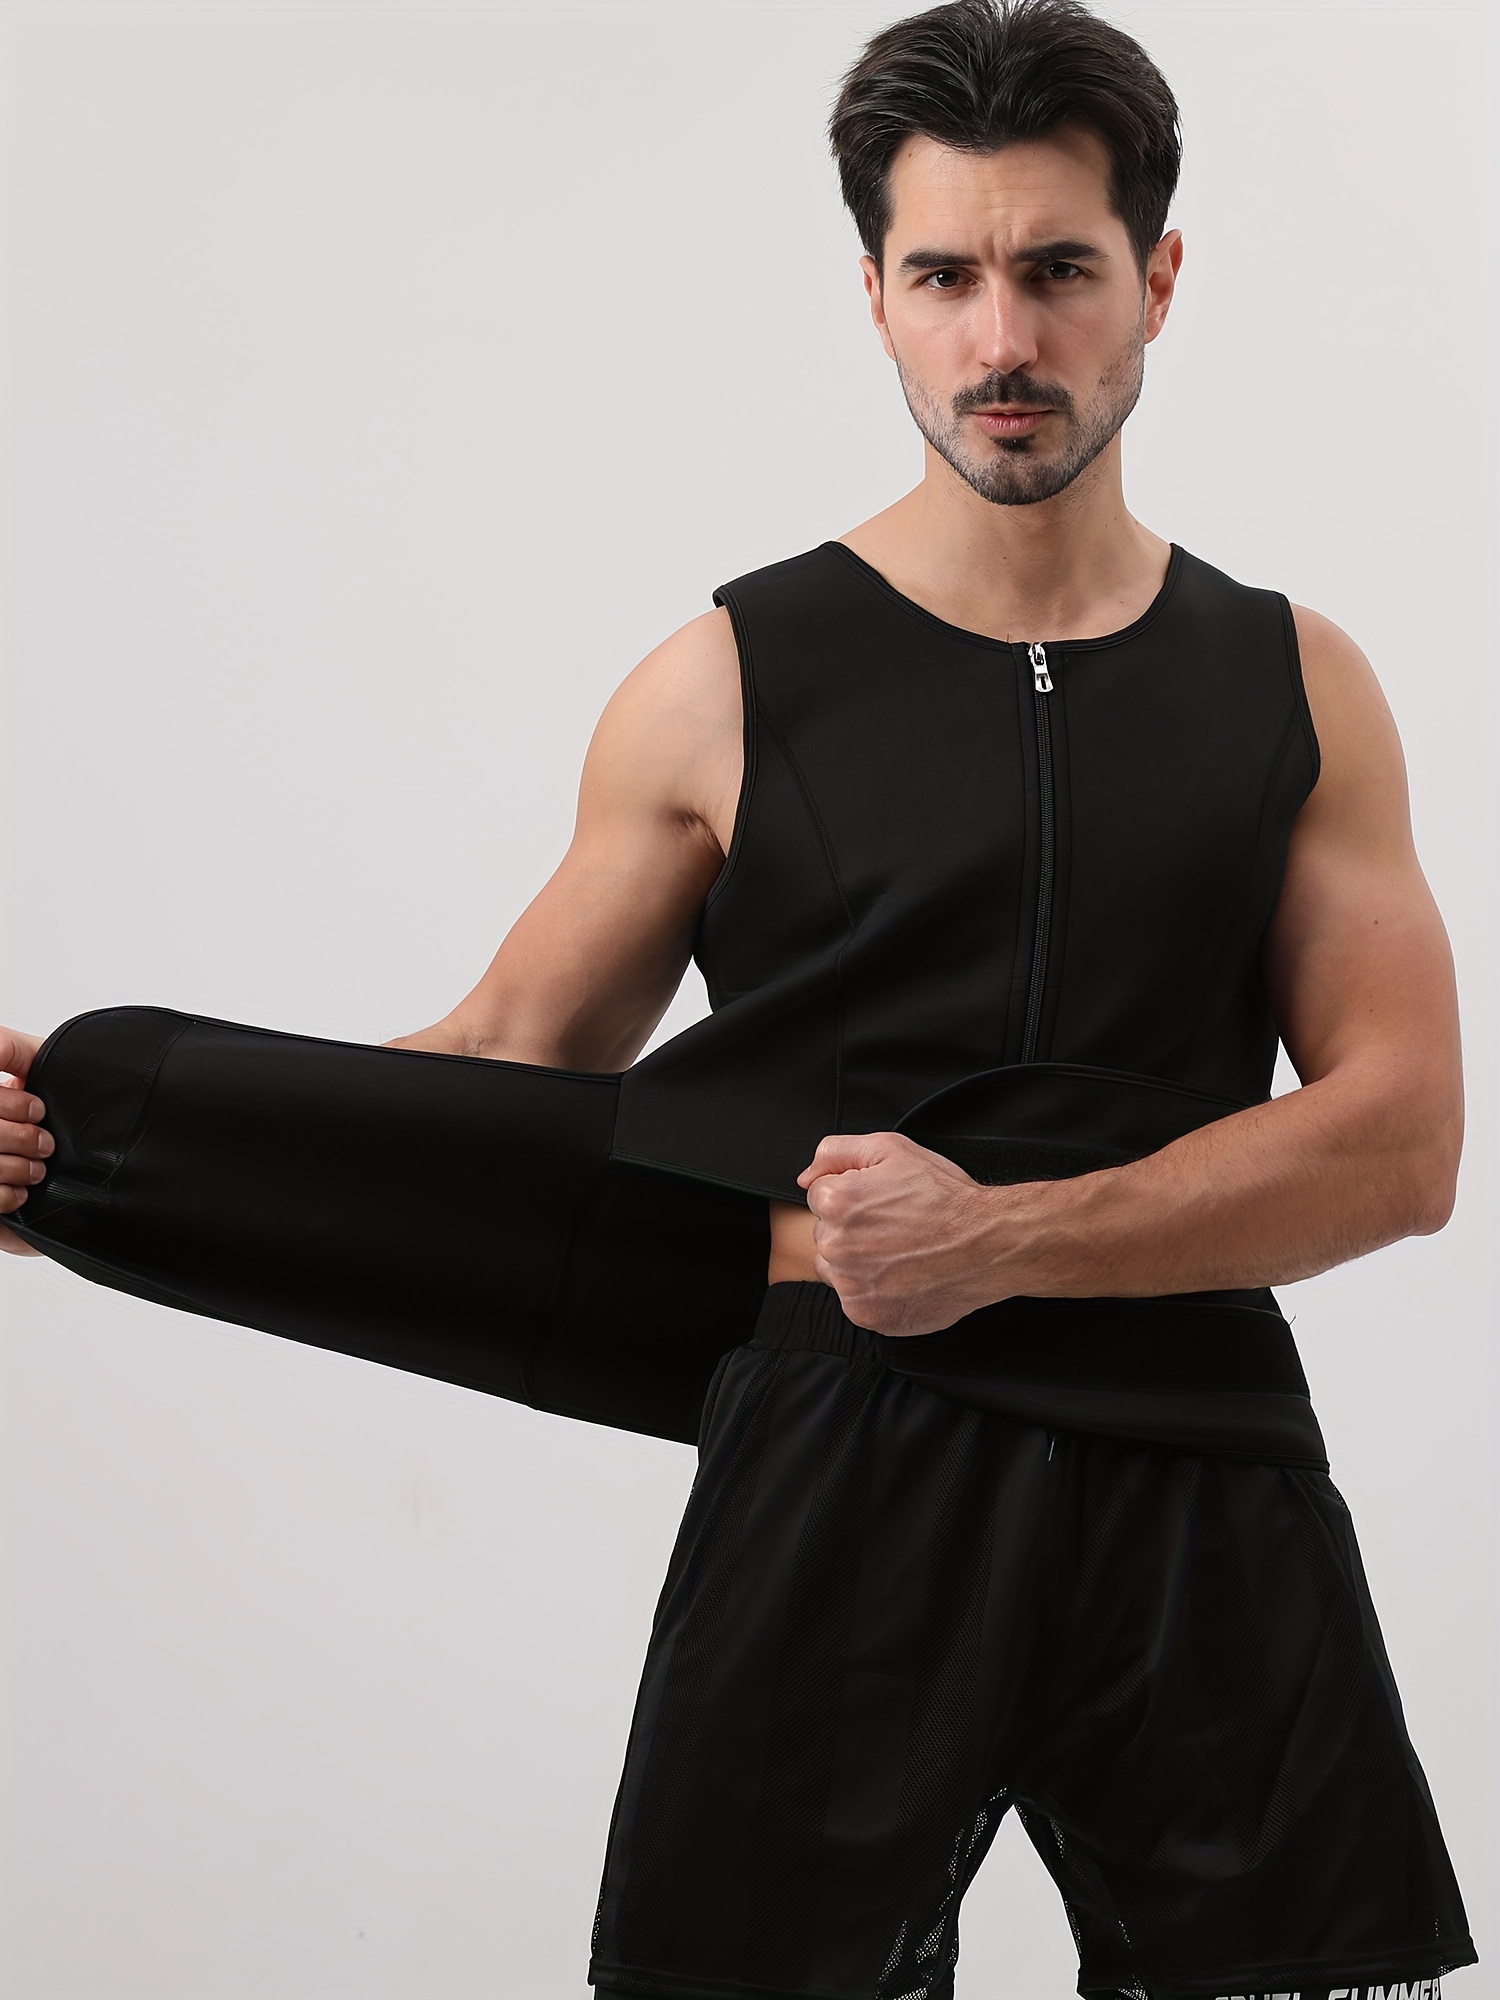 Sauna Shirt For Men, Short Sleeve Sauna Suit For Men Weight Loss, Sweat  Body Shaper Sauna Vest For Men Gym Exercise Sauna Top